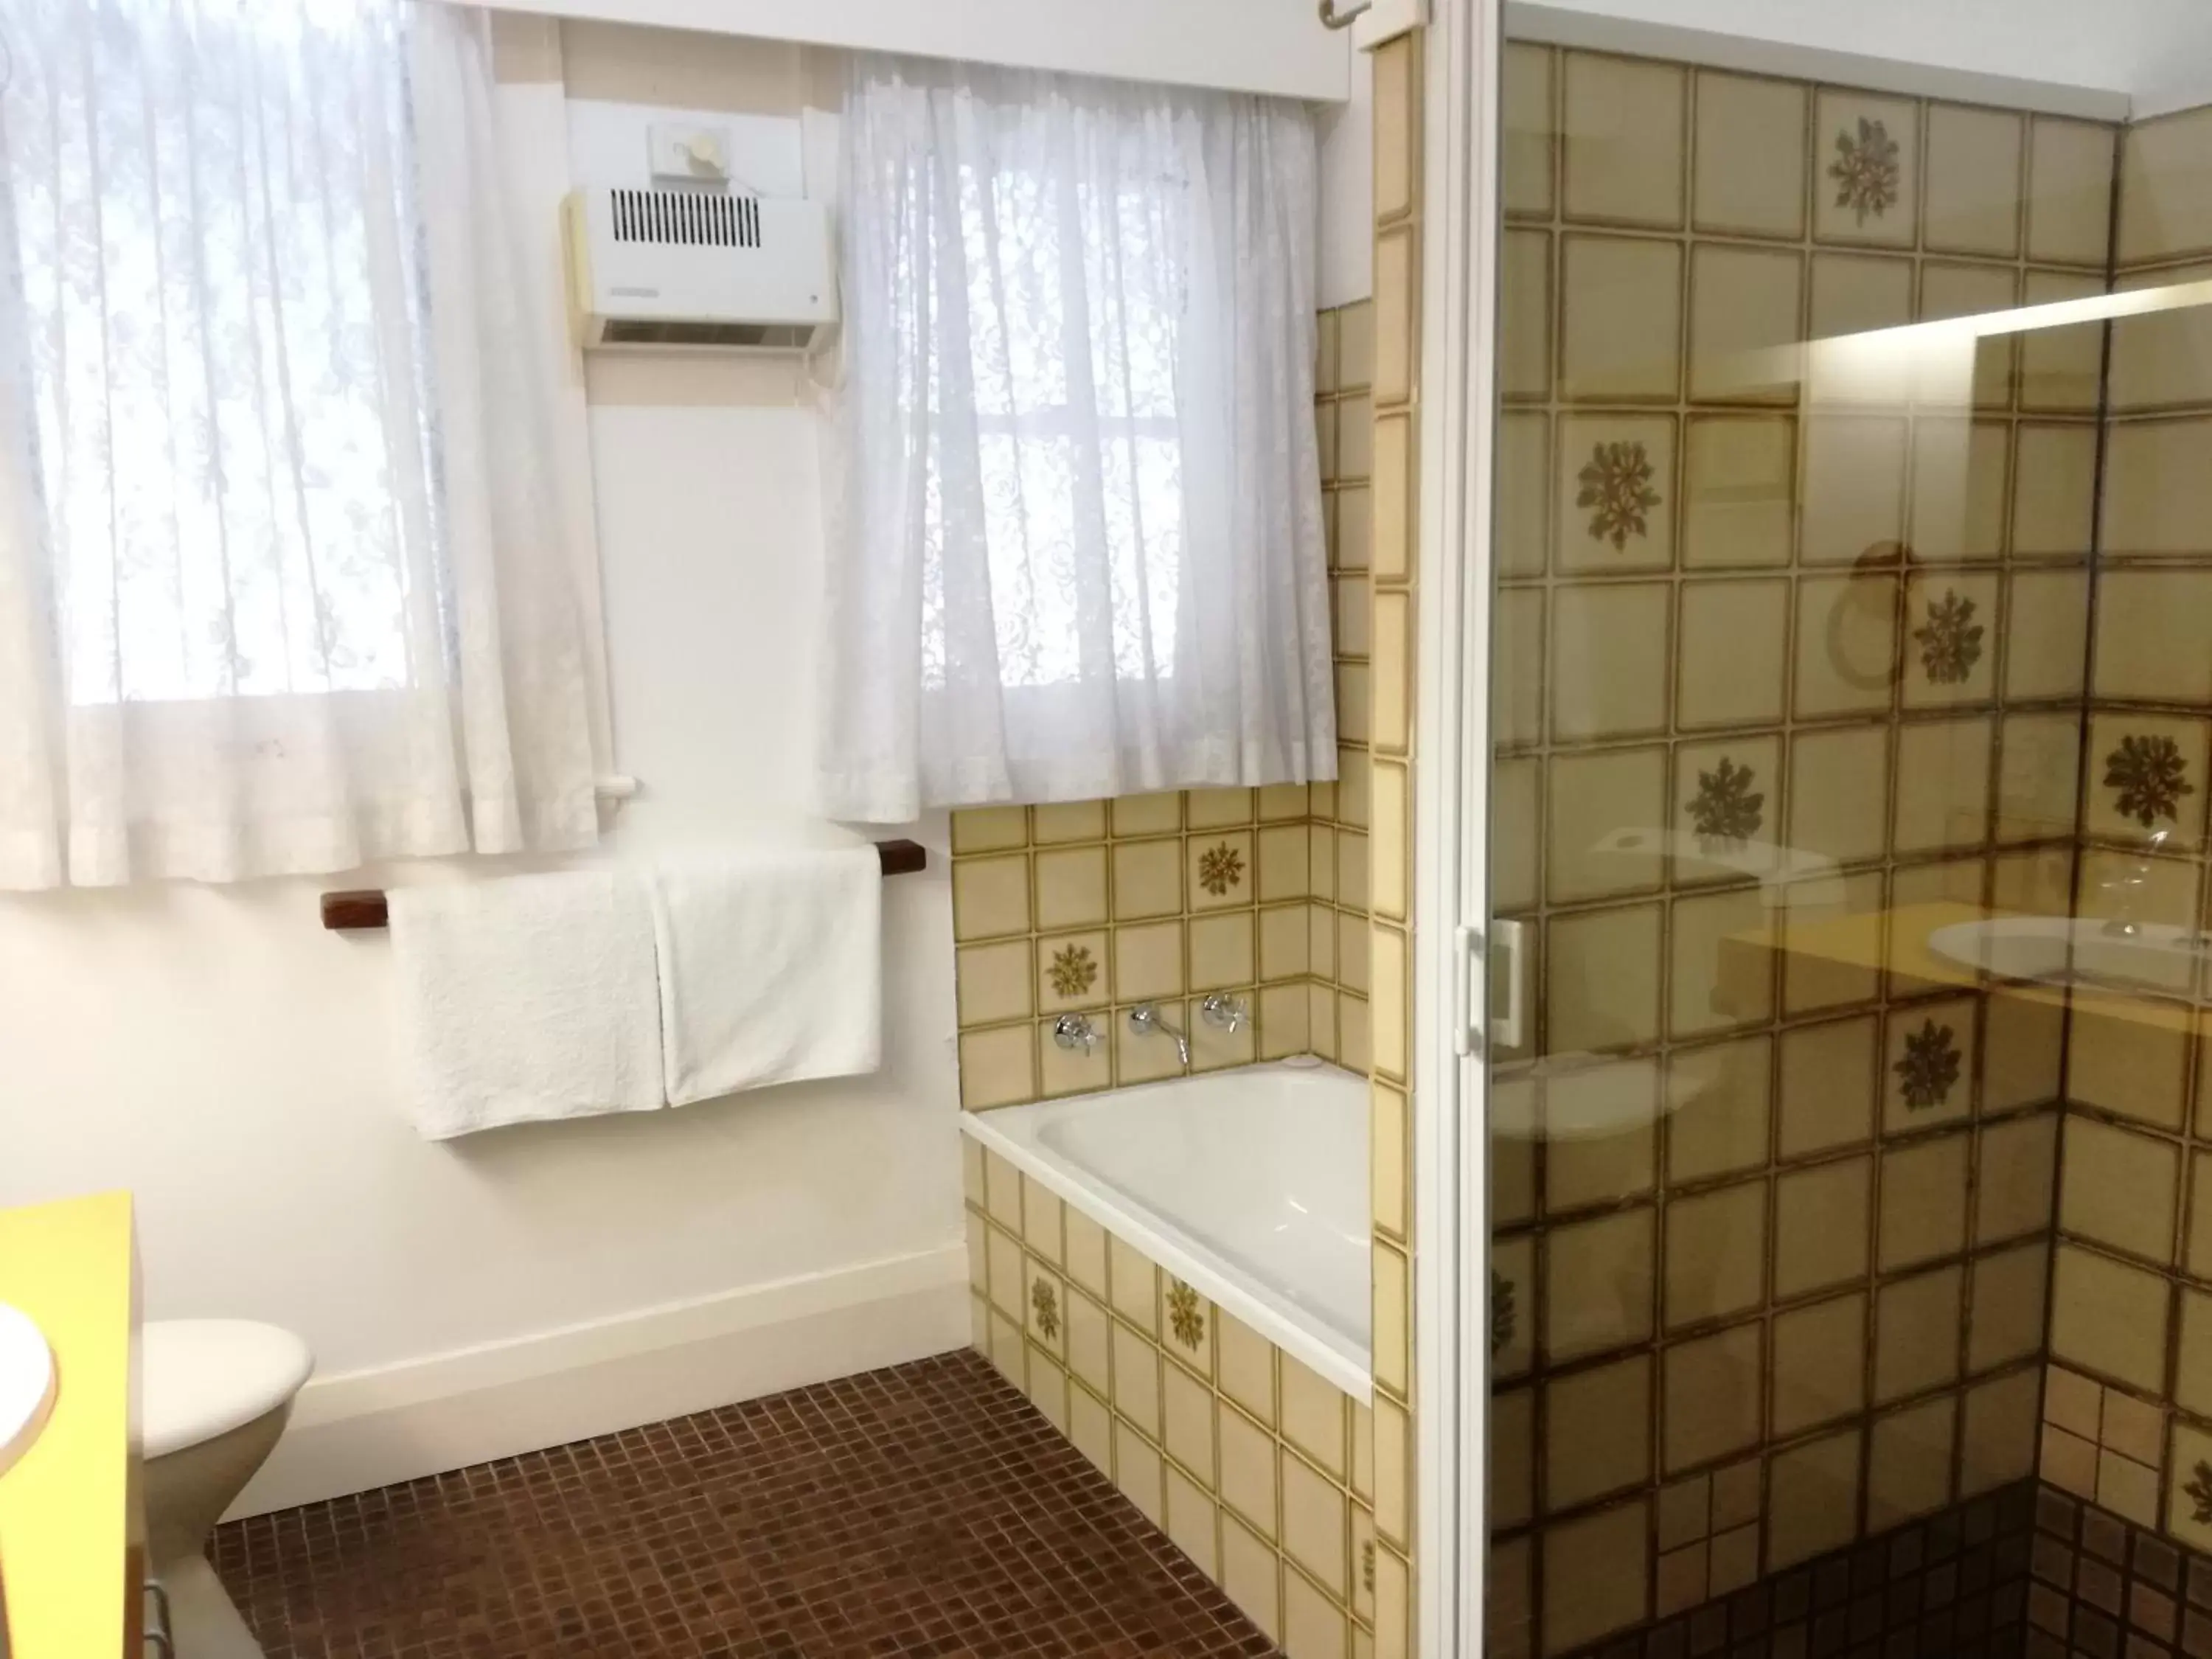 Bathroom in Motel Mayfair on Cavell